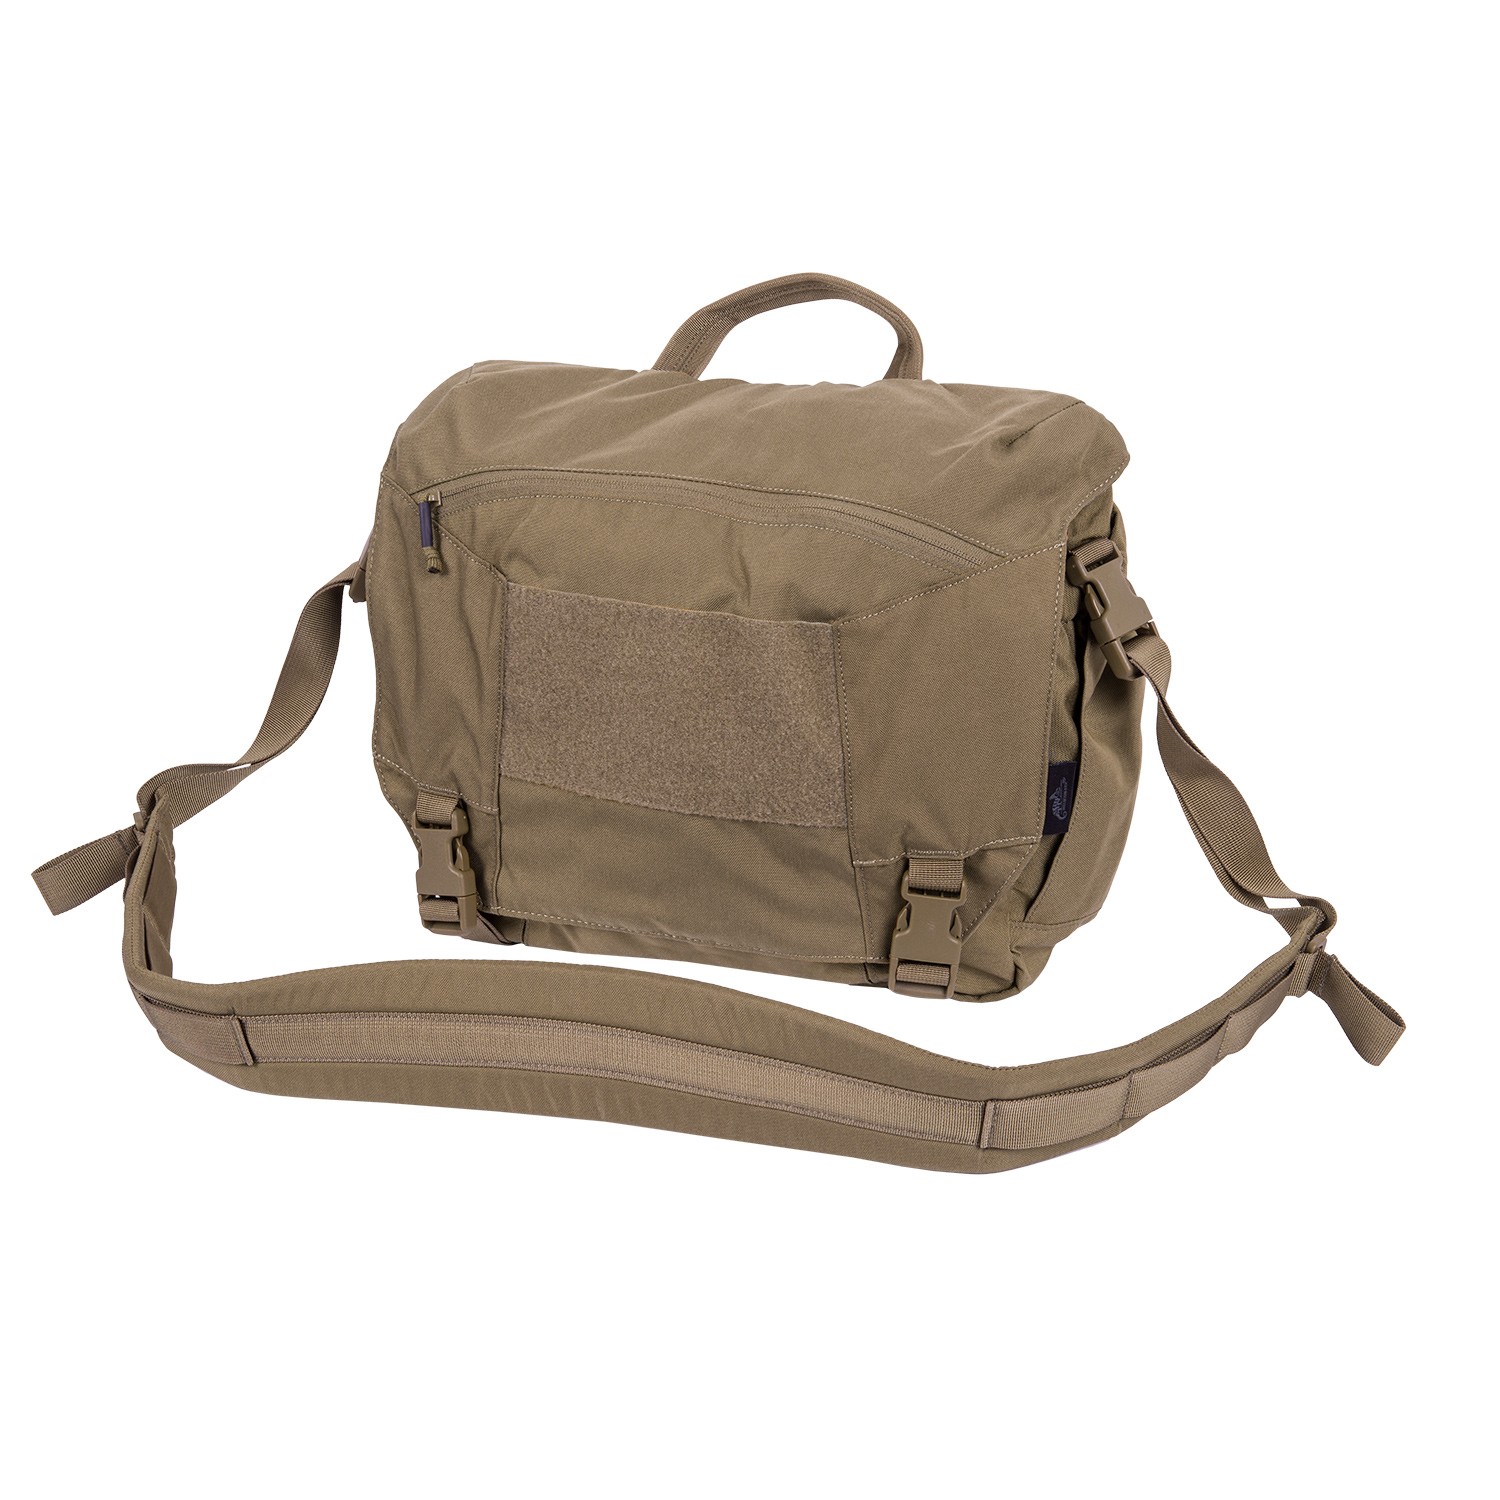 Neck Utility Shoulder Bag - Red – The Official Brand